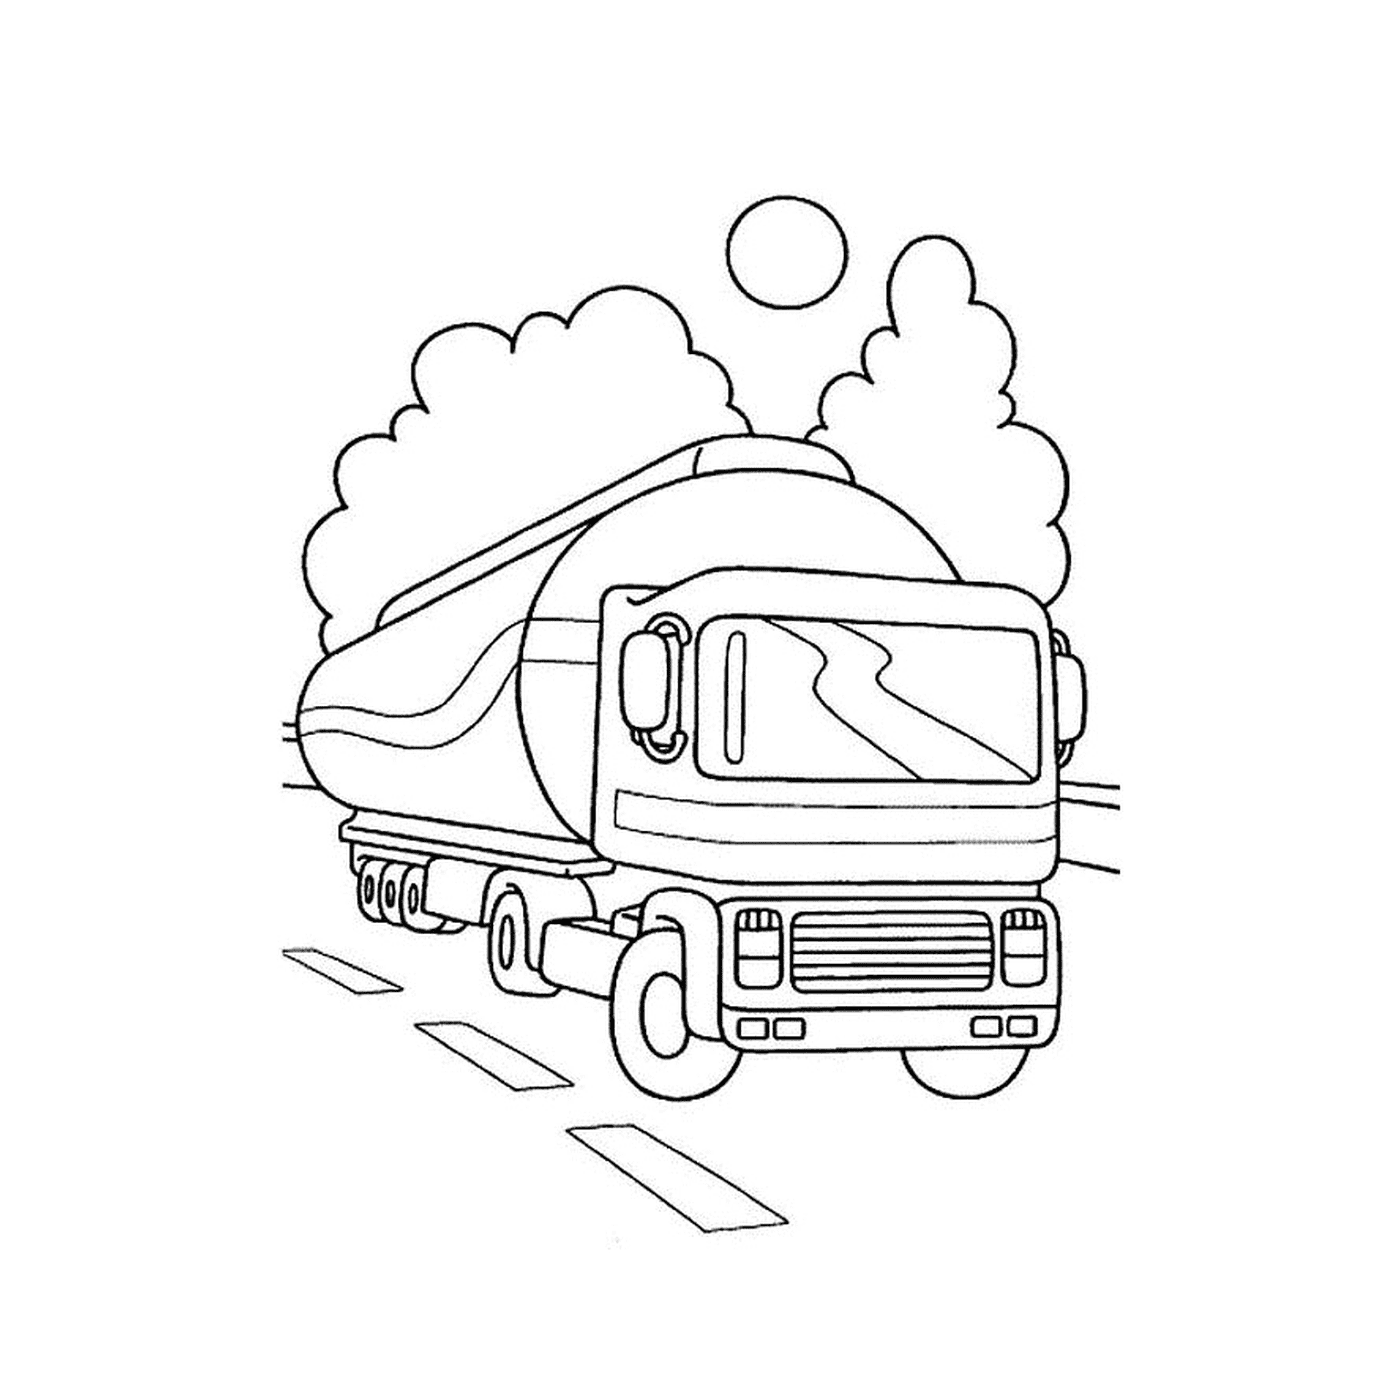  Un camion sulla strada 